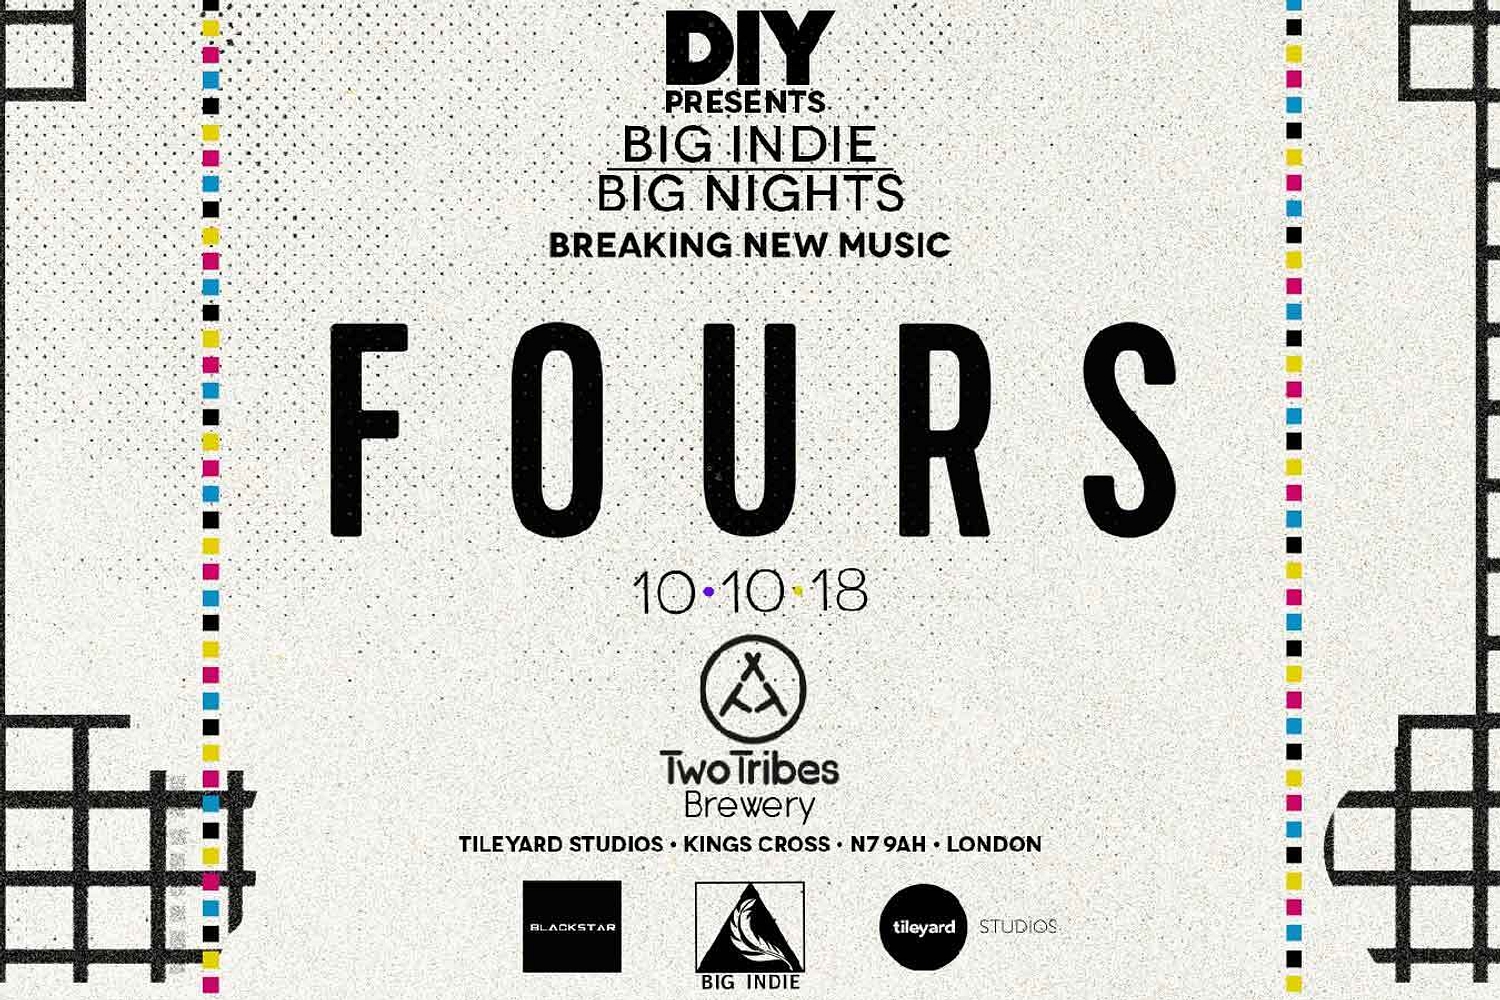 London quartet FOURS to play Big Indie Big Nights